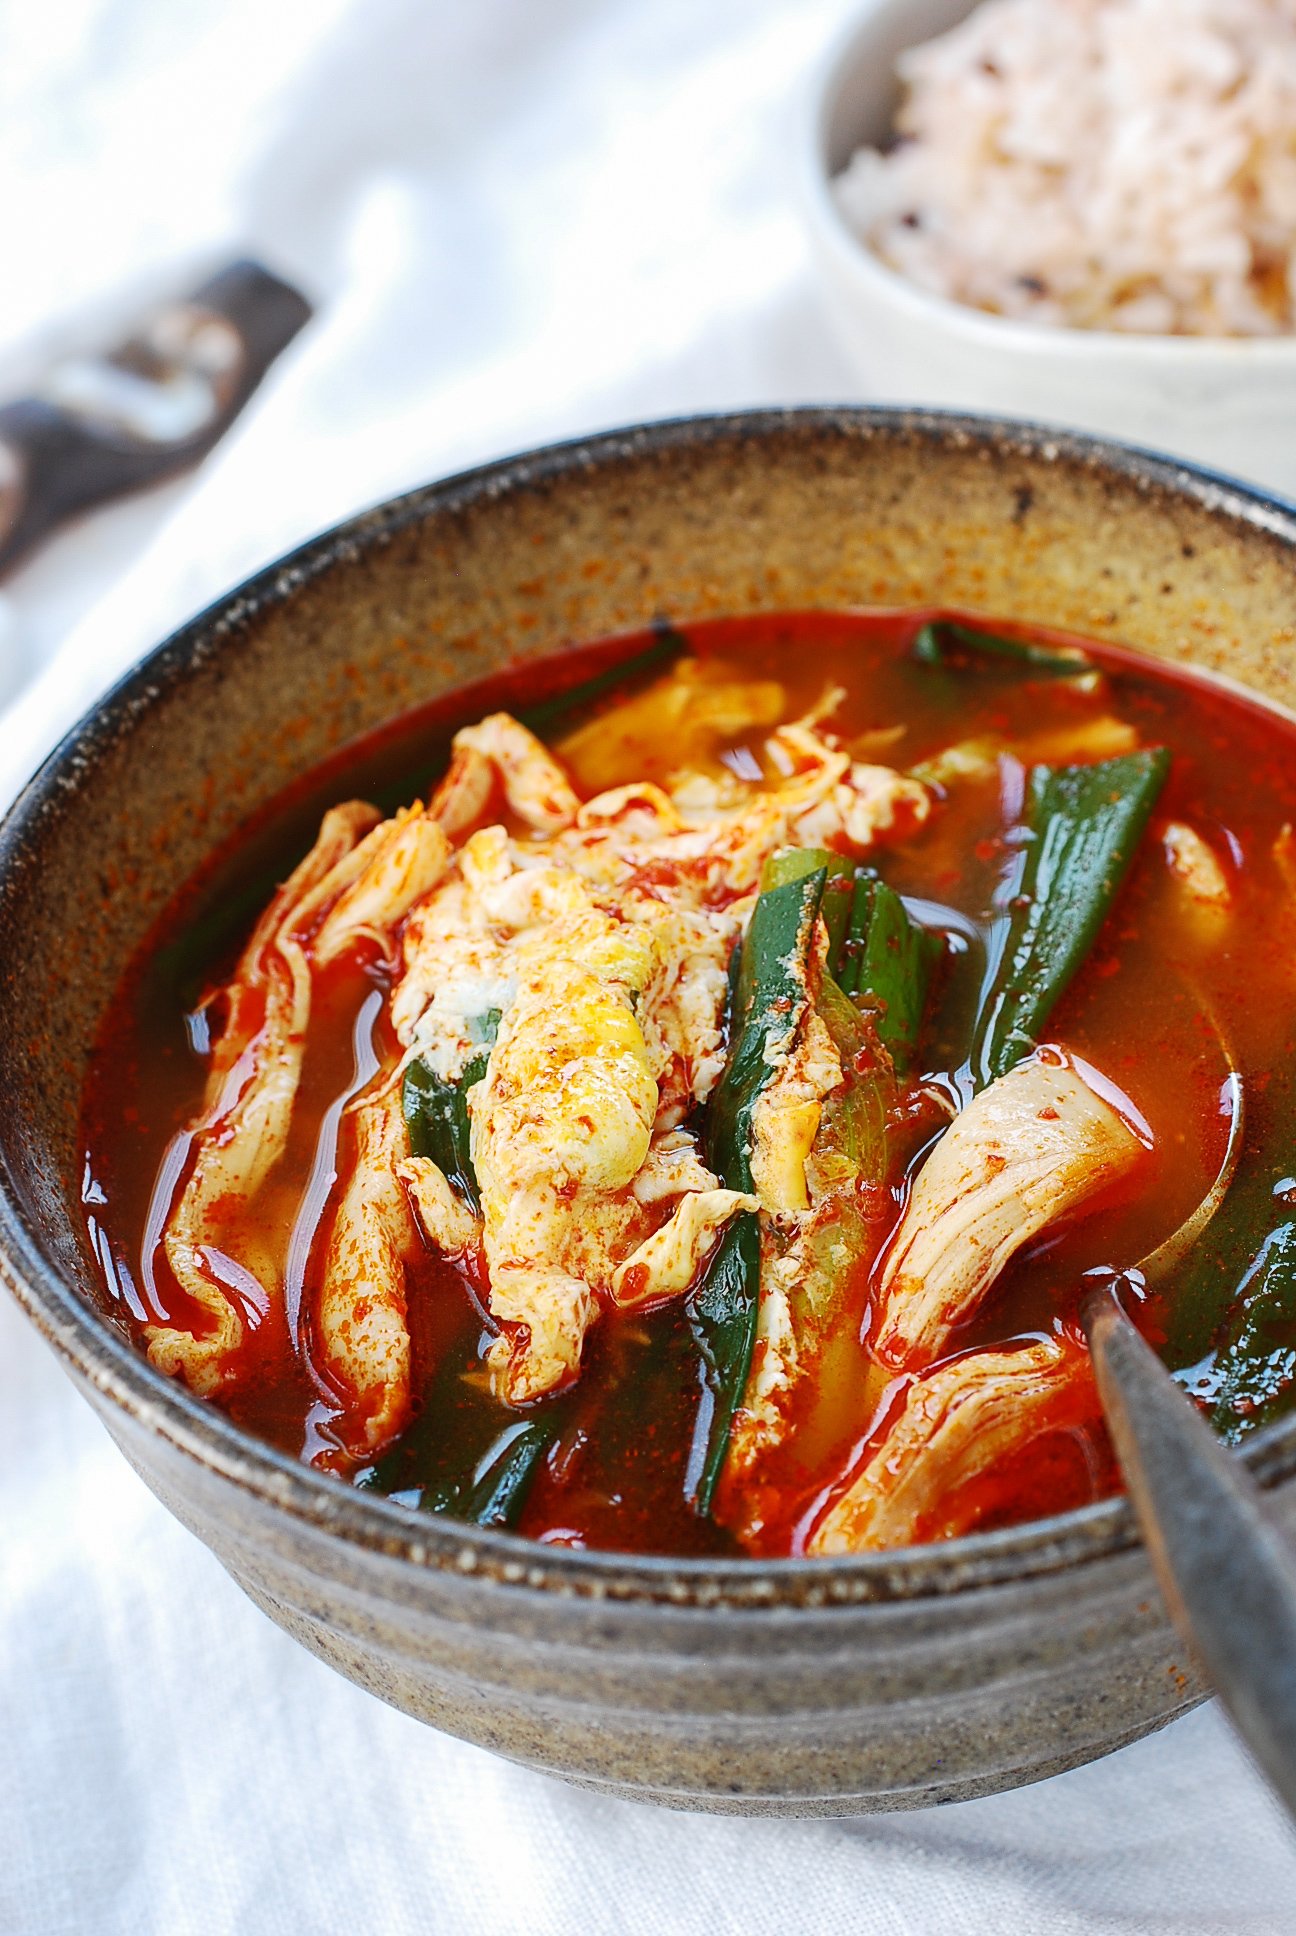 DSC 1843 - Dakgaejang (Spicy Chicken Soup with Scallions)